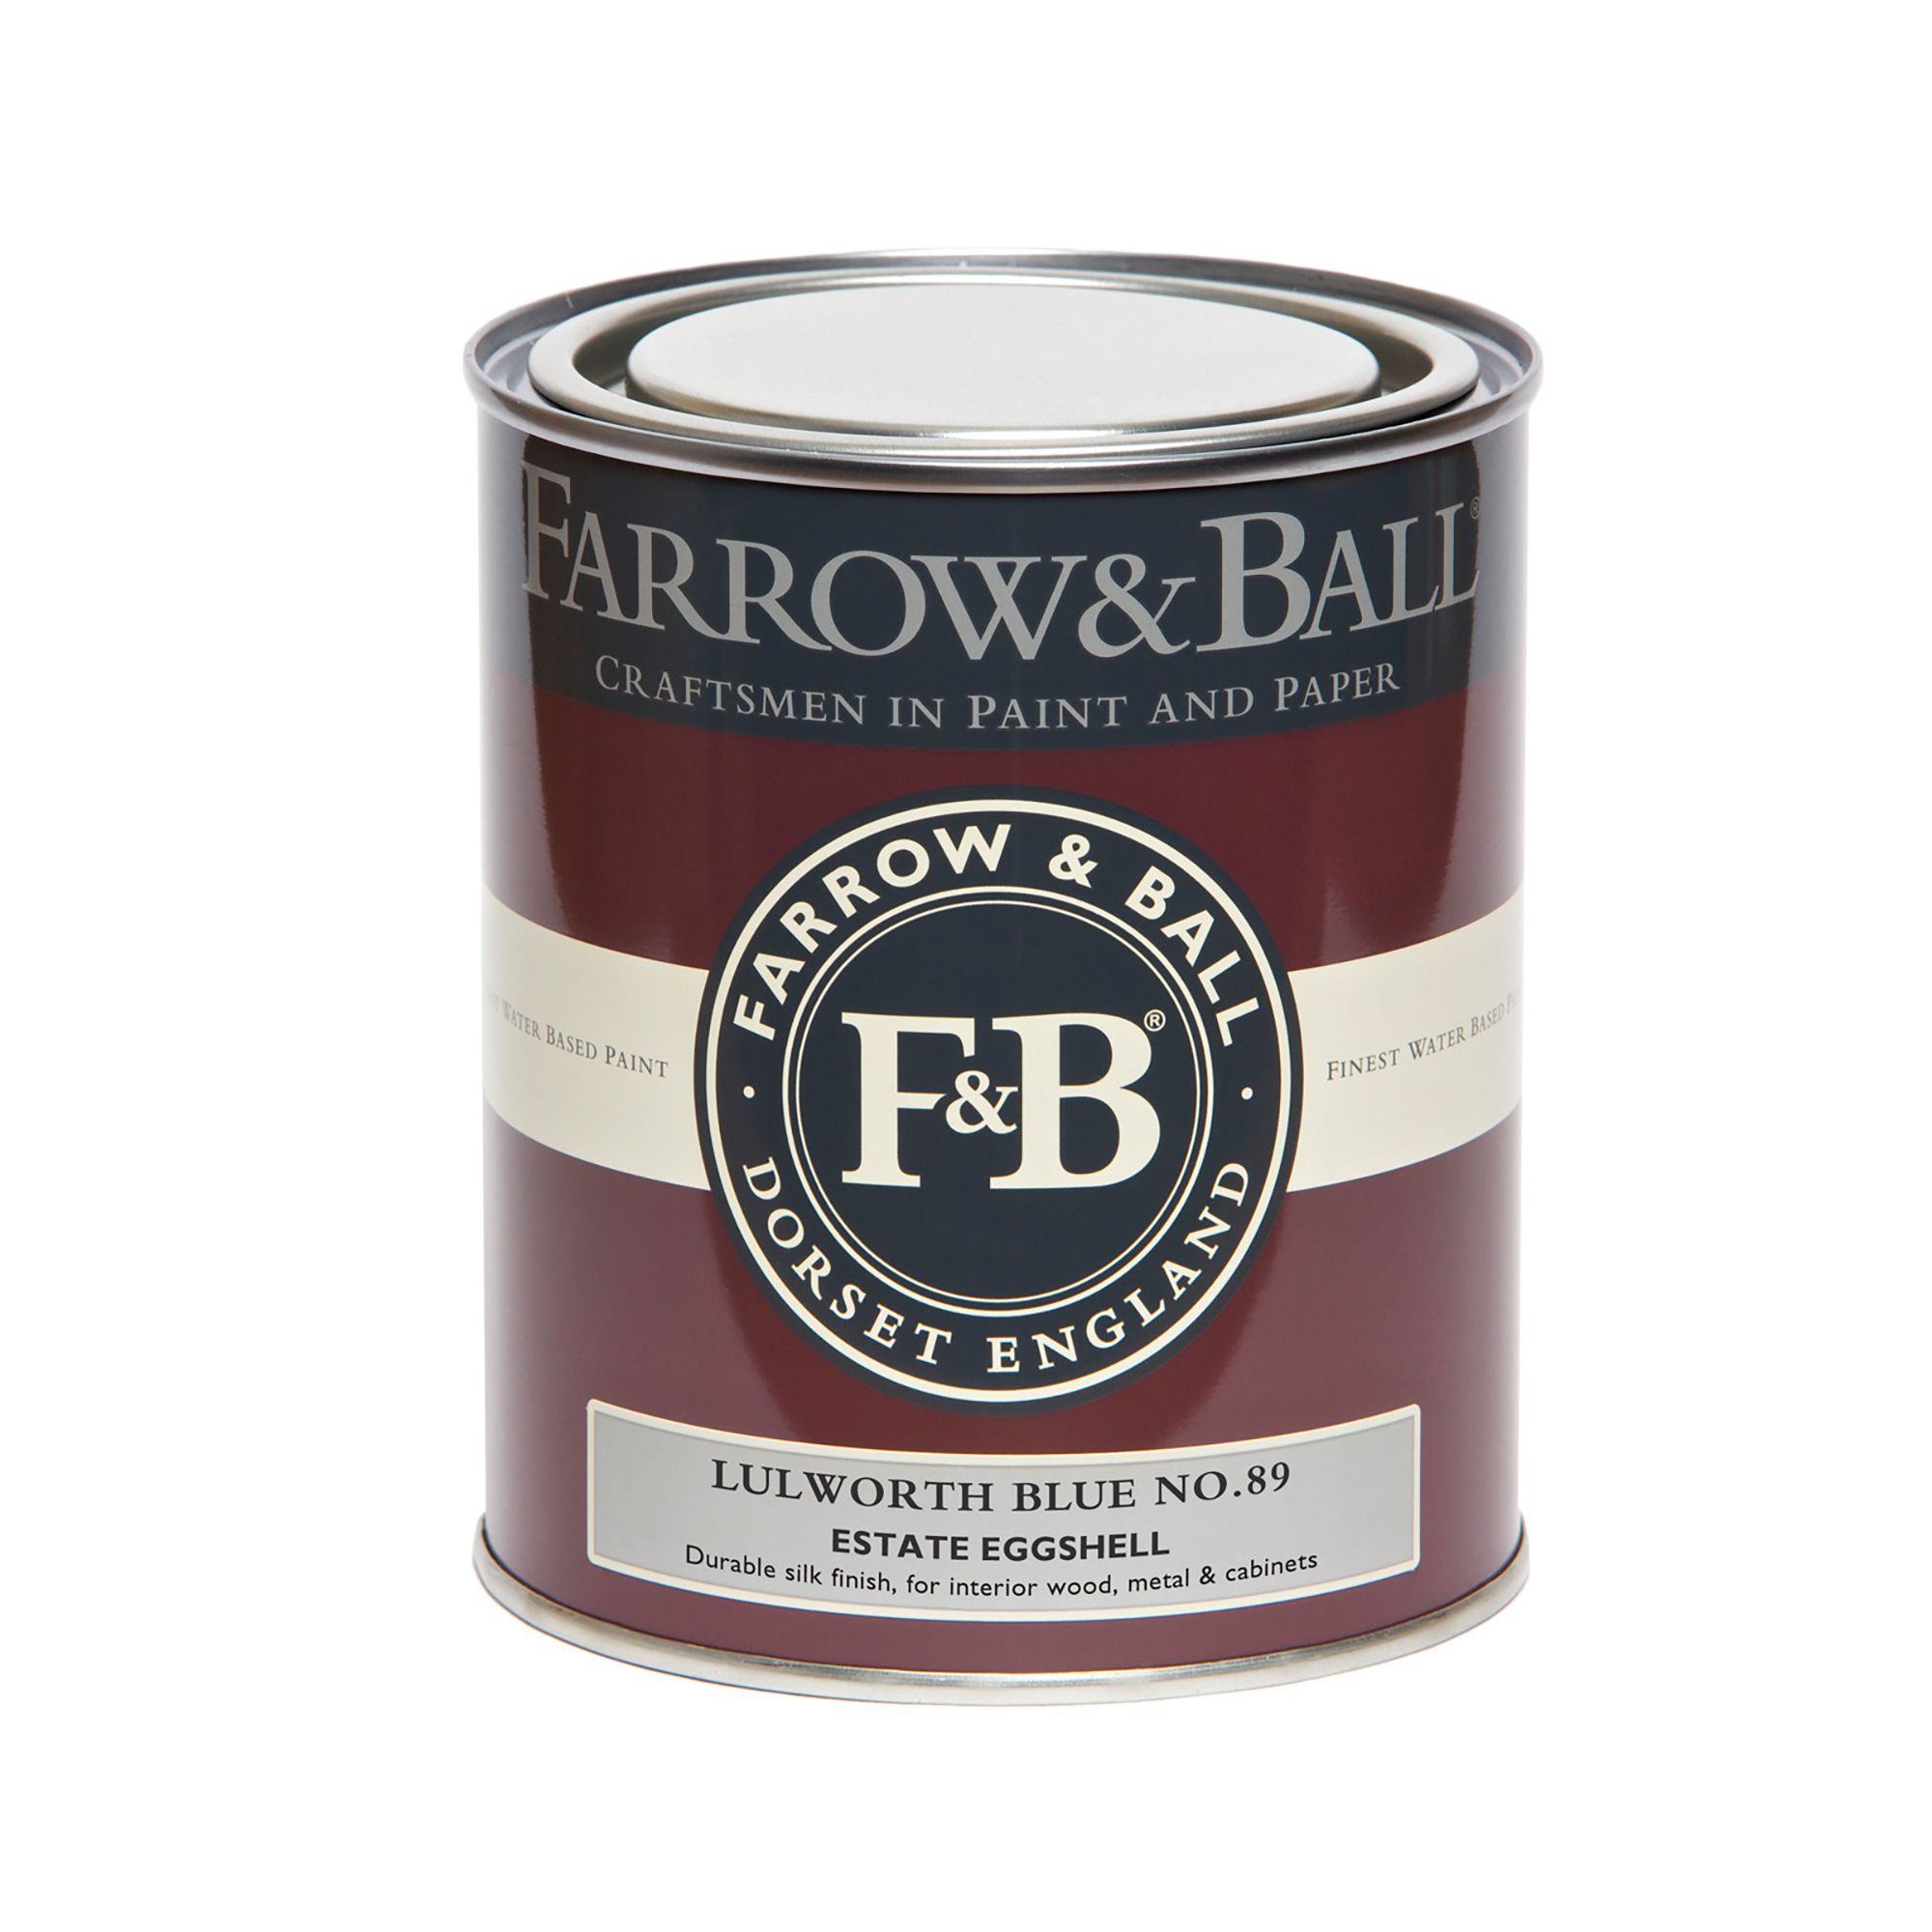 Farrow & Ball Estate Lulworth Blue No.89 Eggshell Paint, 750ml